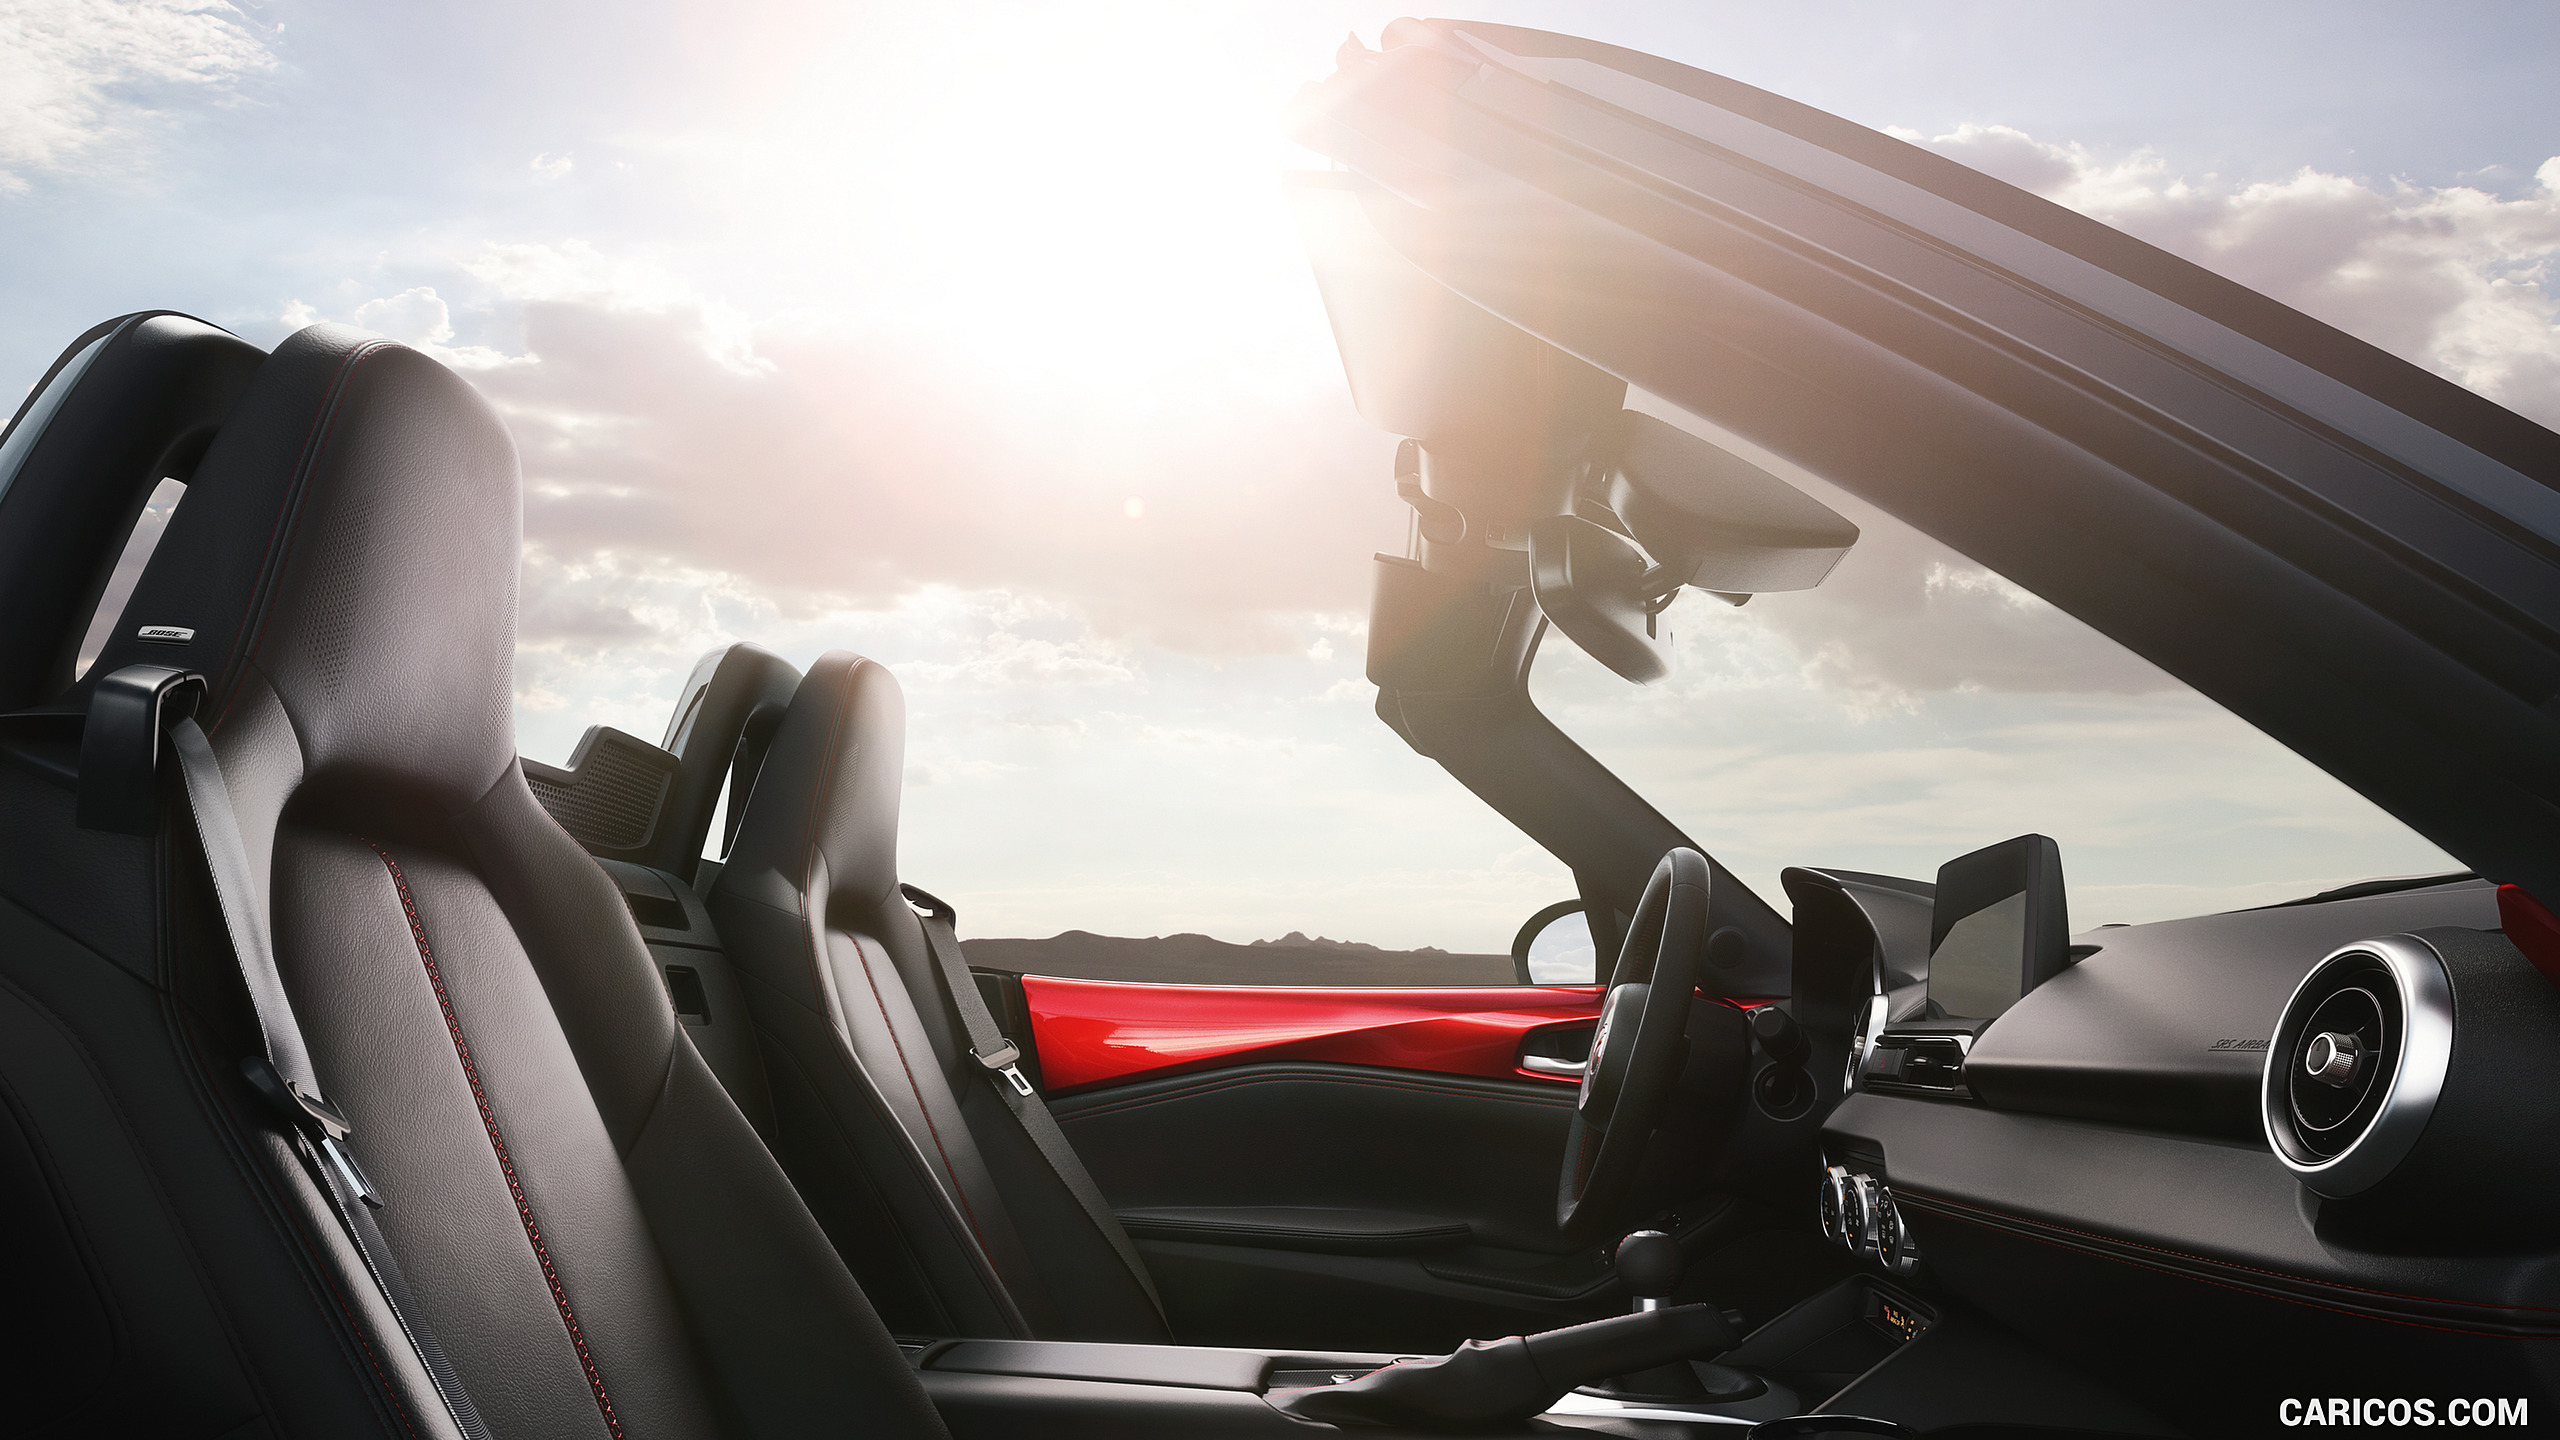 2019 Mazda MX-5 Roadster - Interior, Seats, #84 of 101